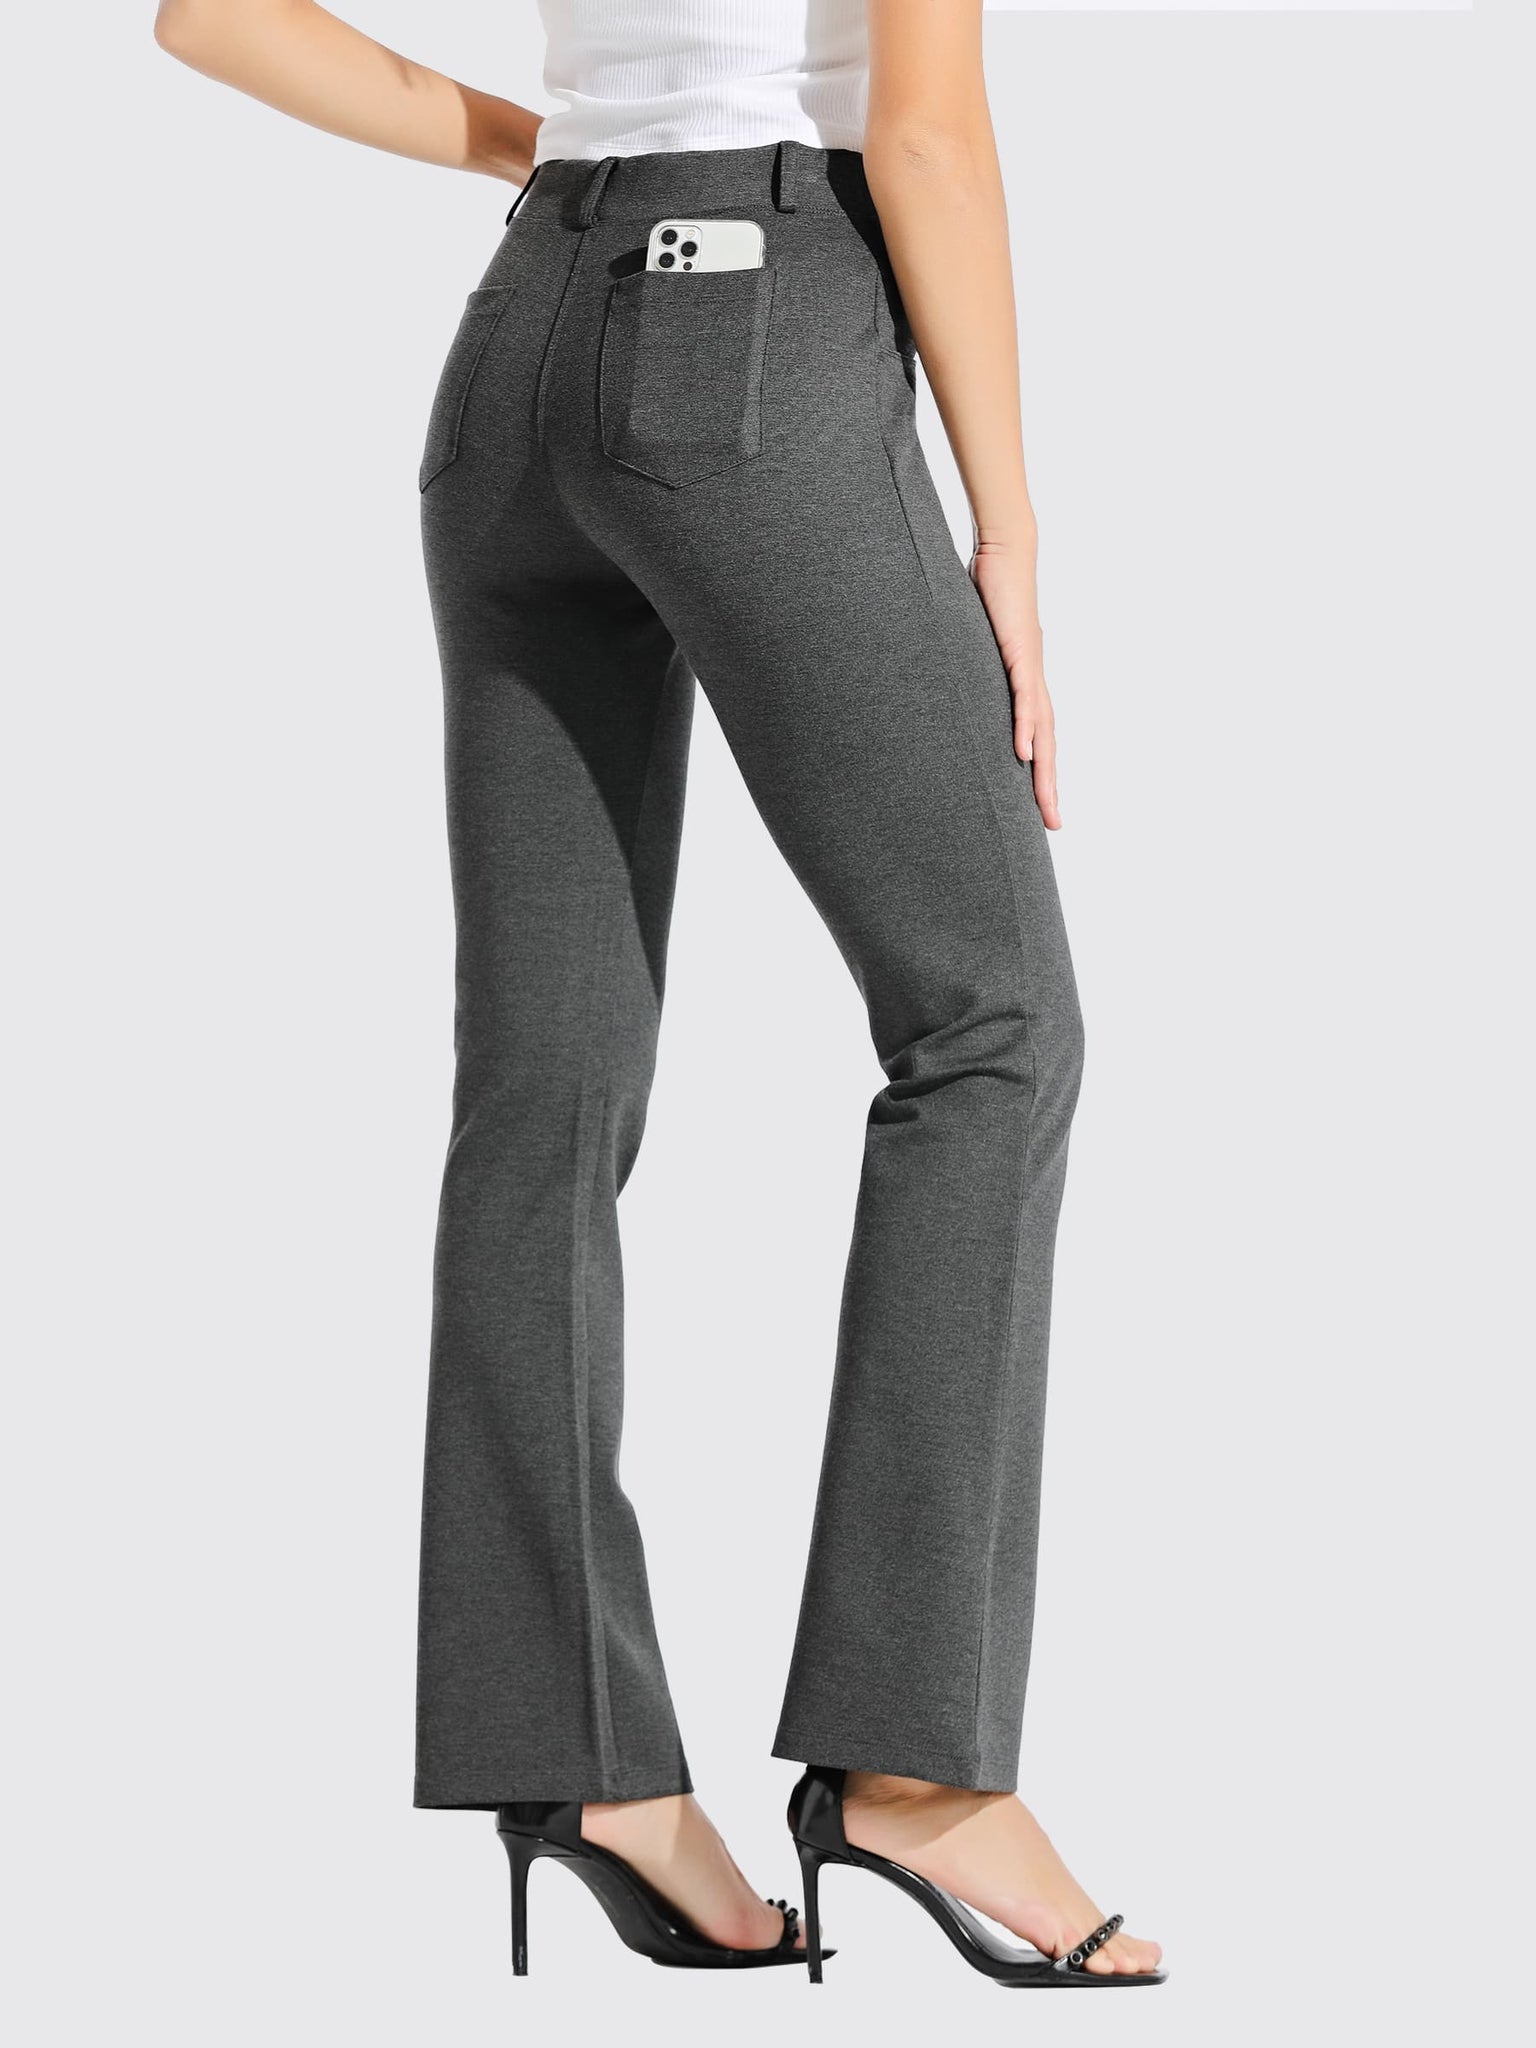 Betabrand Size Petite Medium Black/White Herringbone Bootcut Yoga Dress  Pants